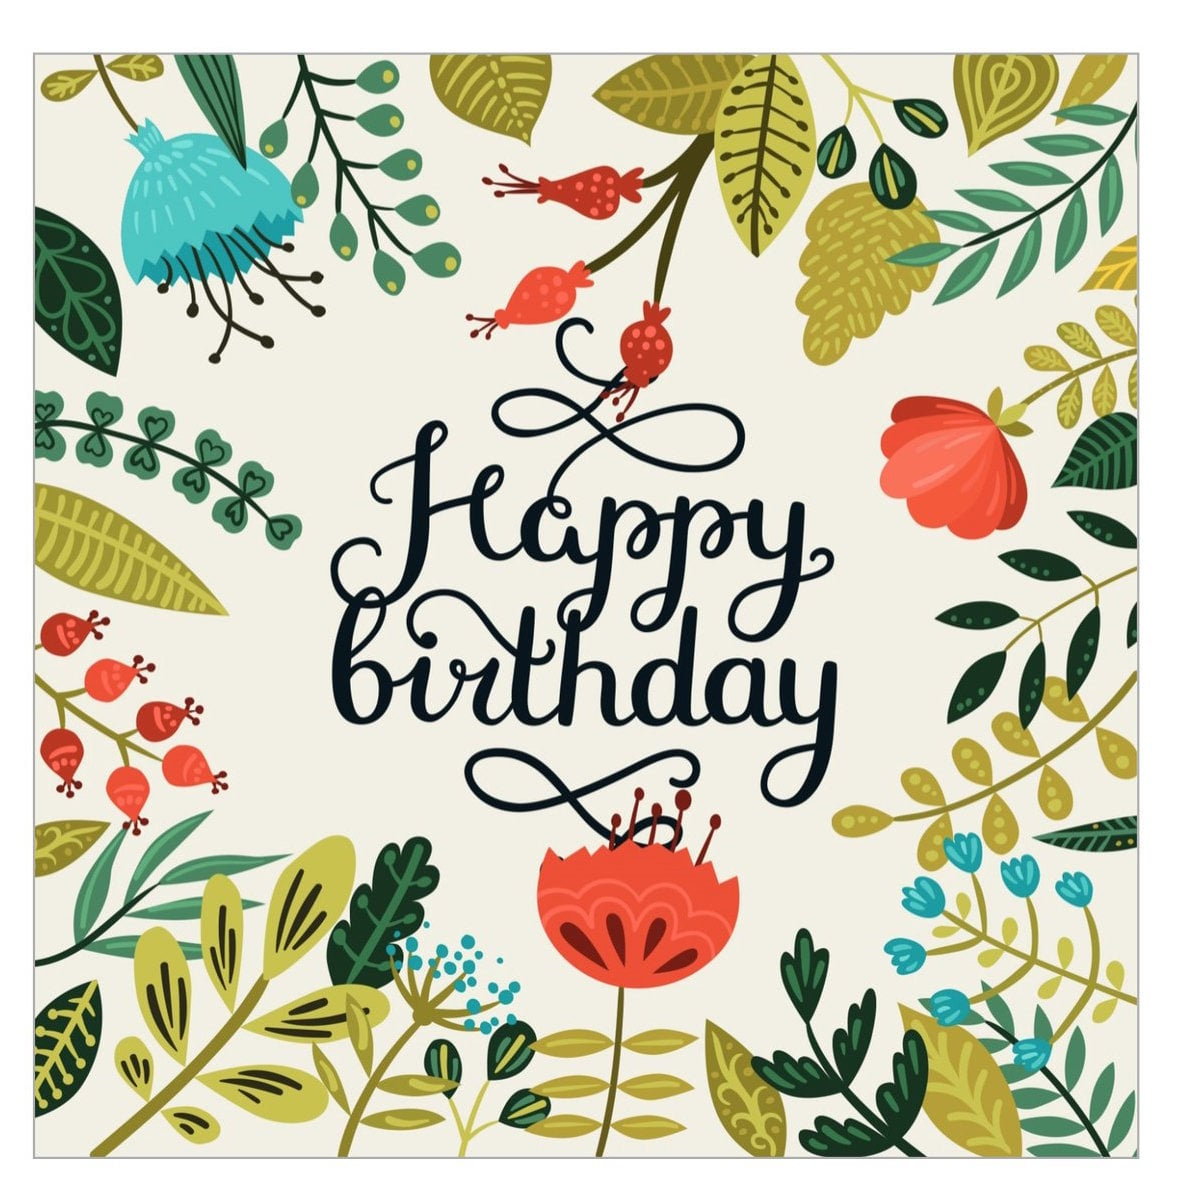 Free Printable Cards For Birthdays | Popsugar Smart Living pertaining to Free Printable Happy Birthday Cards